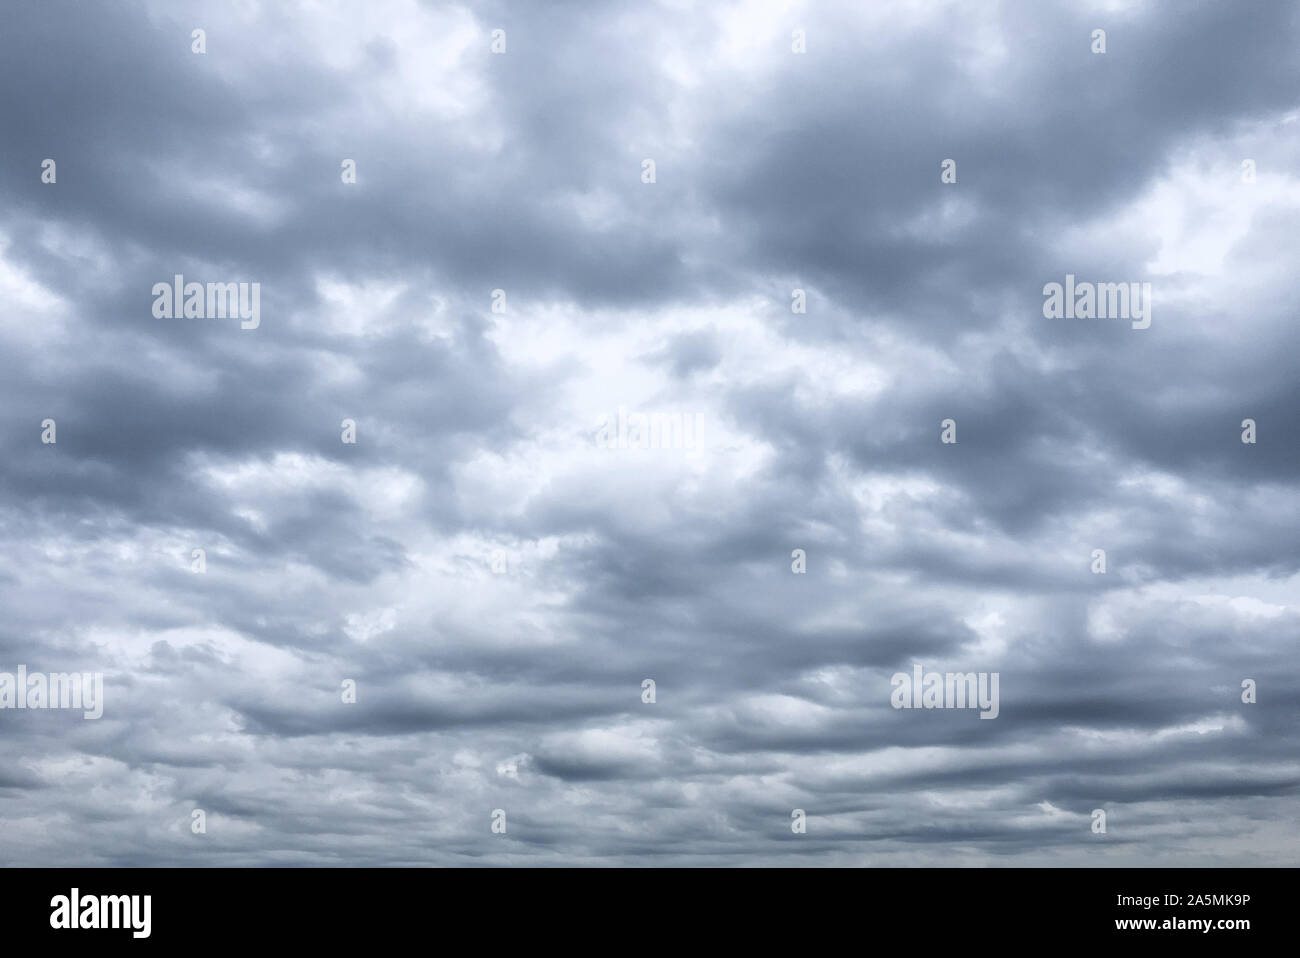 Thunder oscuras nubes en el cielo, nubes de lluvia negra Foto de stock